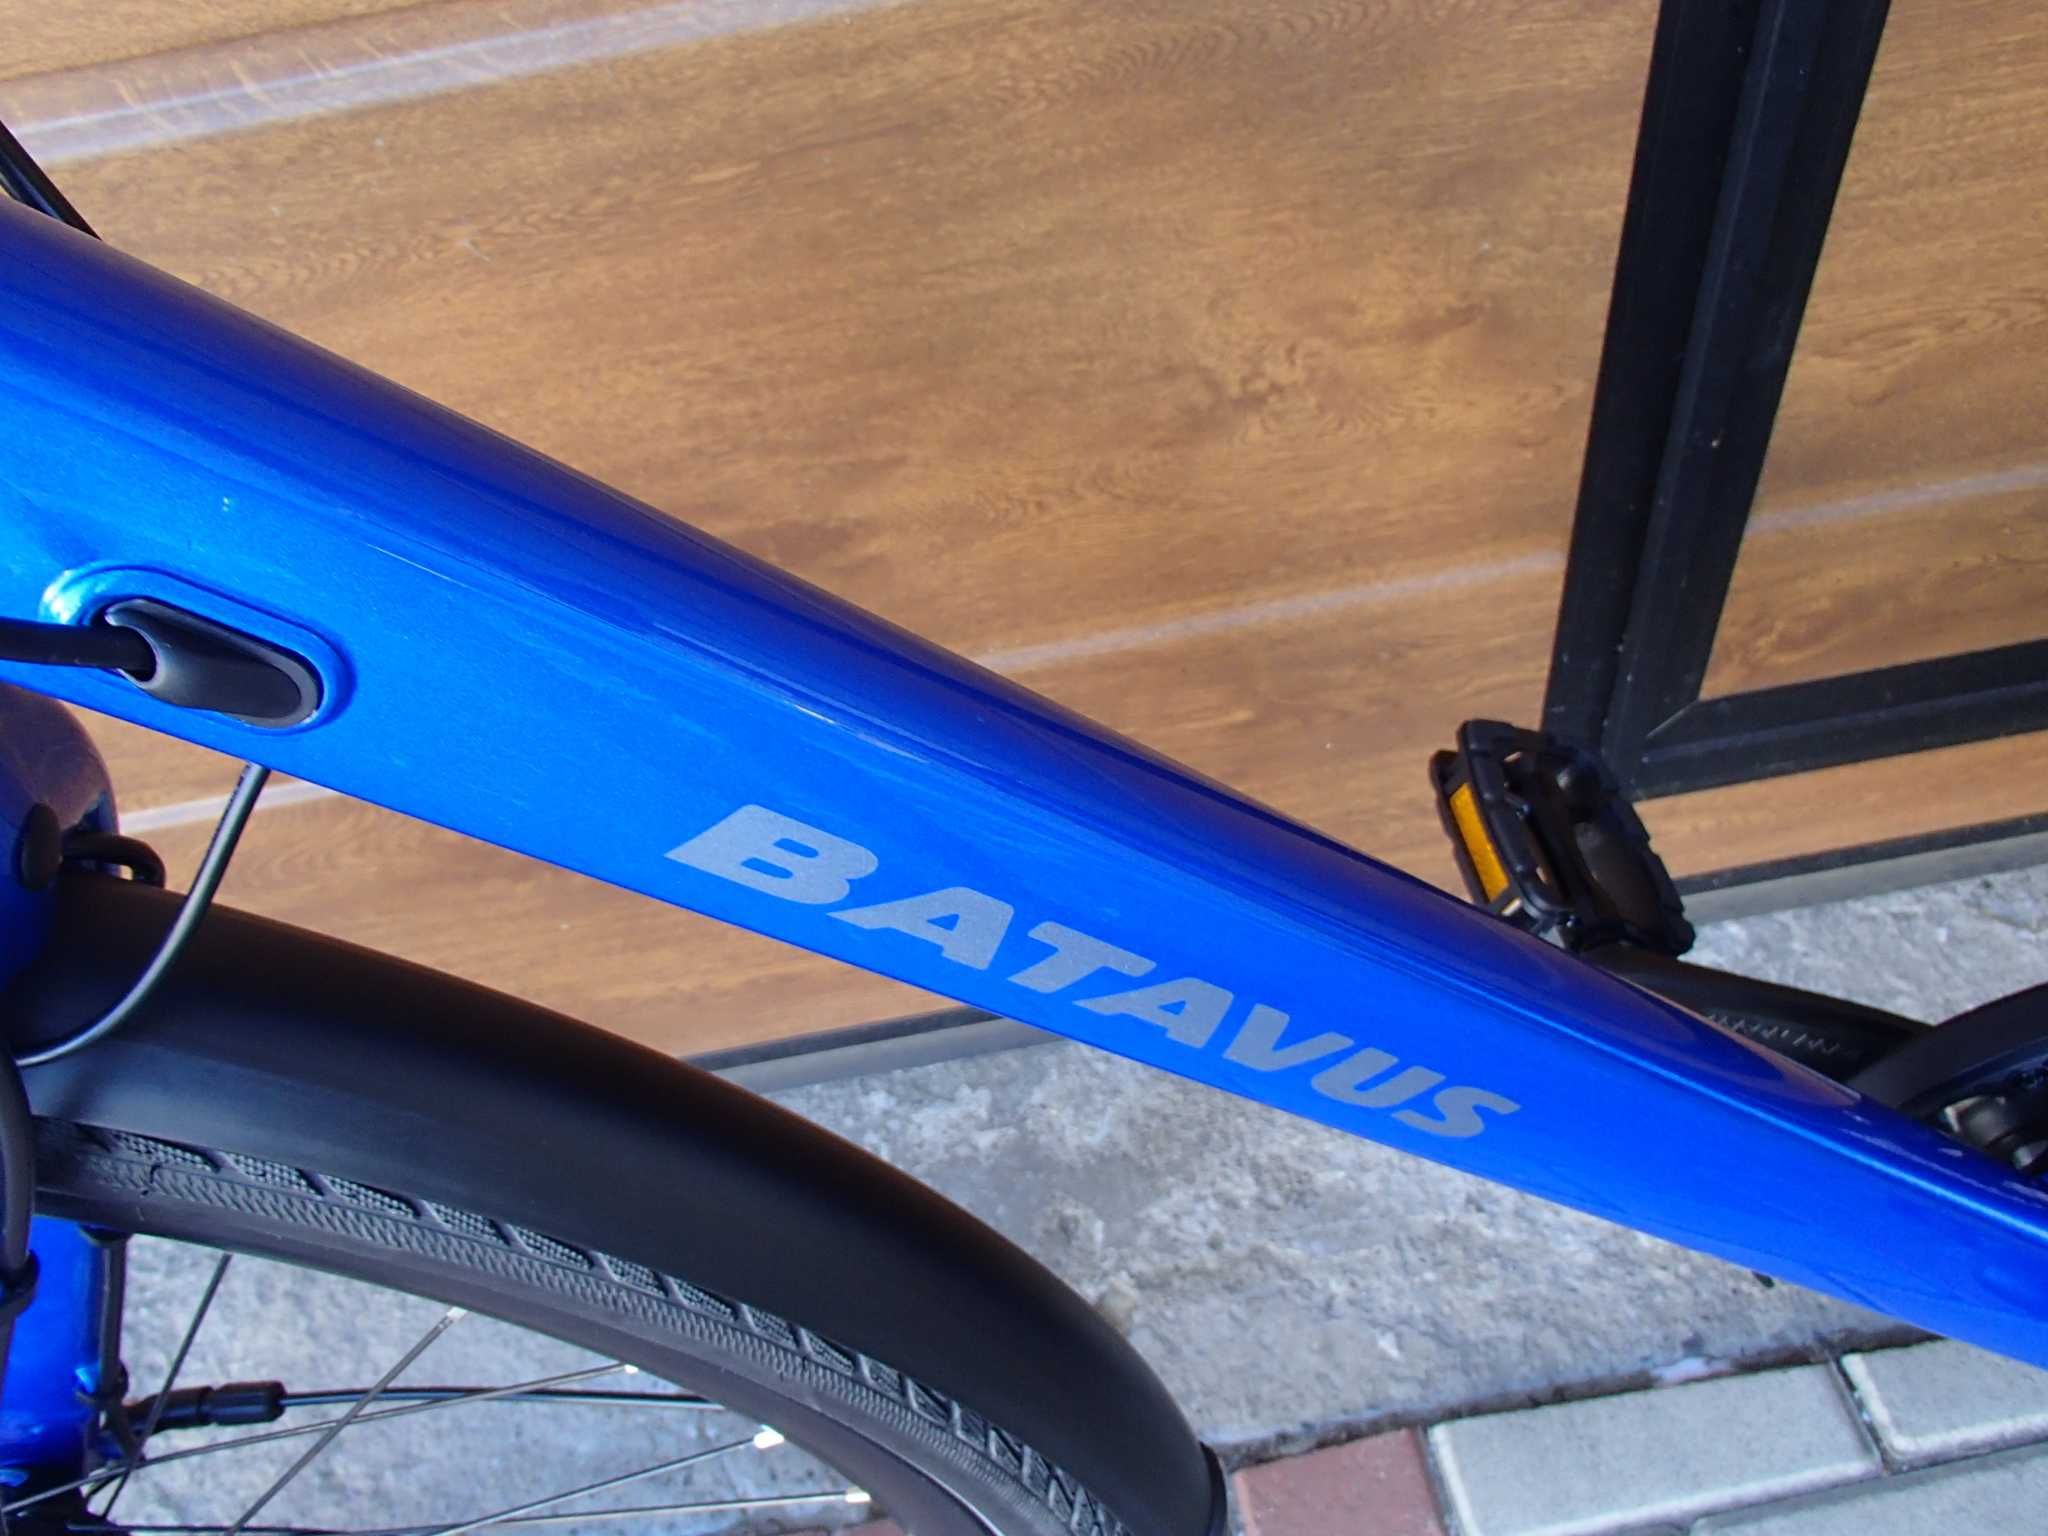 Bicicleta Batavus Cu Transmisie pe curea,Frana hidraulica pe disc[noua